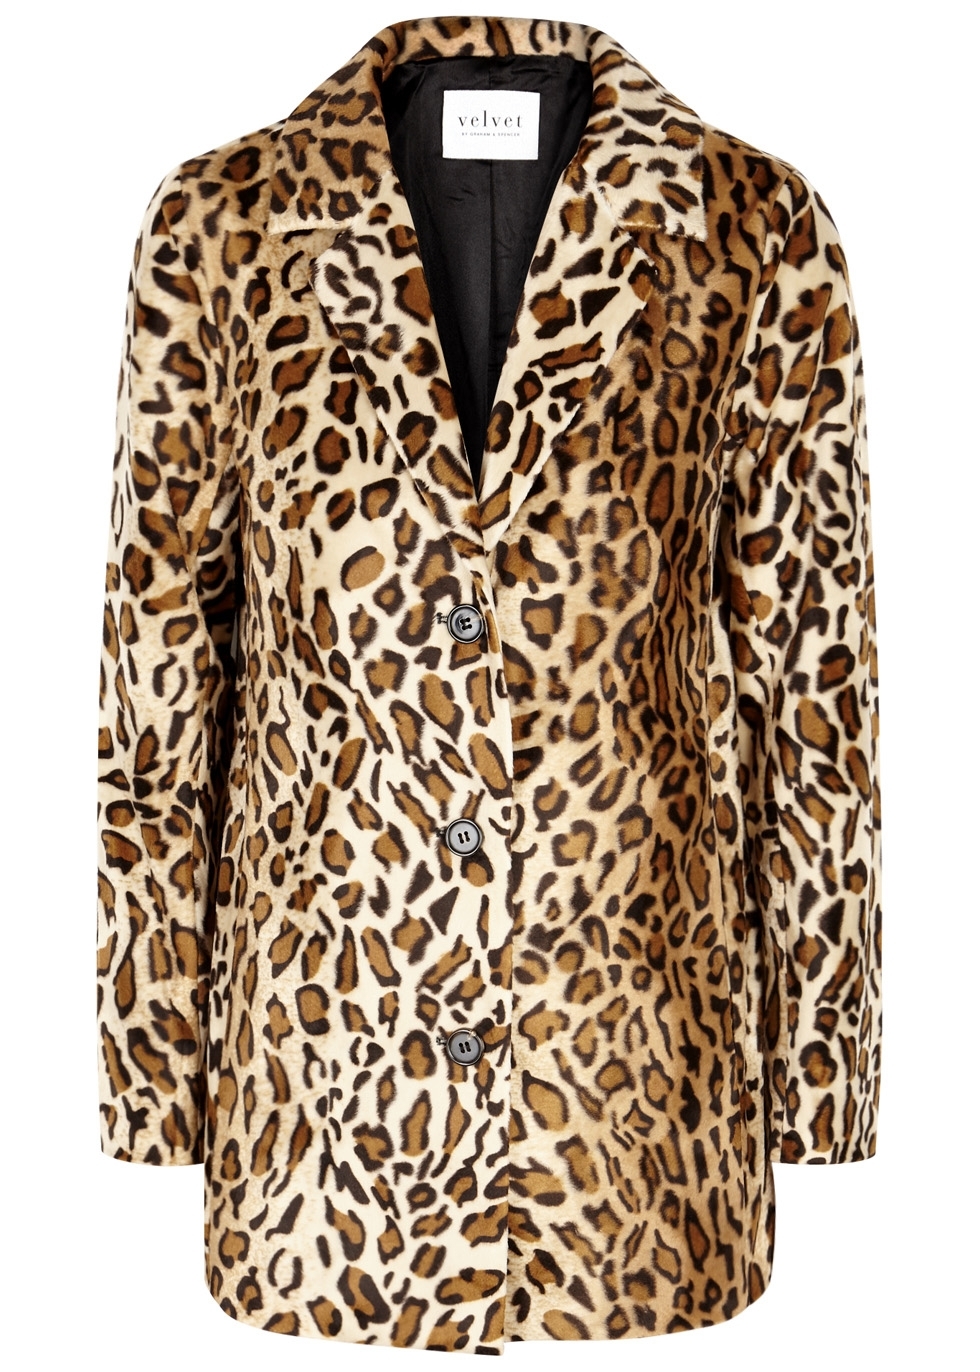 Celine leopard-print faux fur jacket